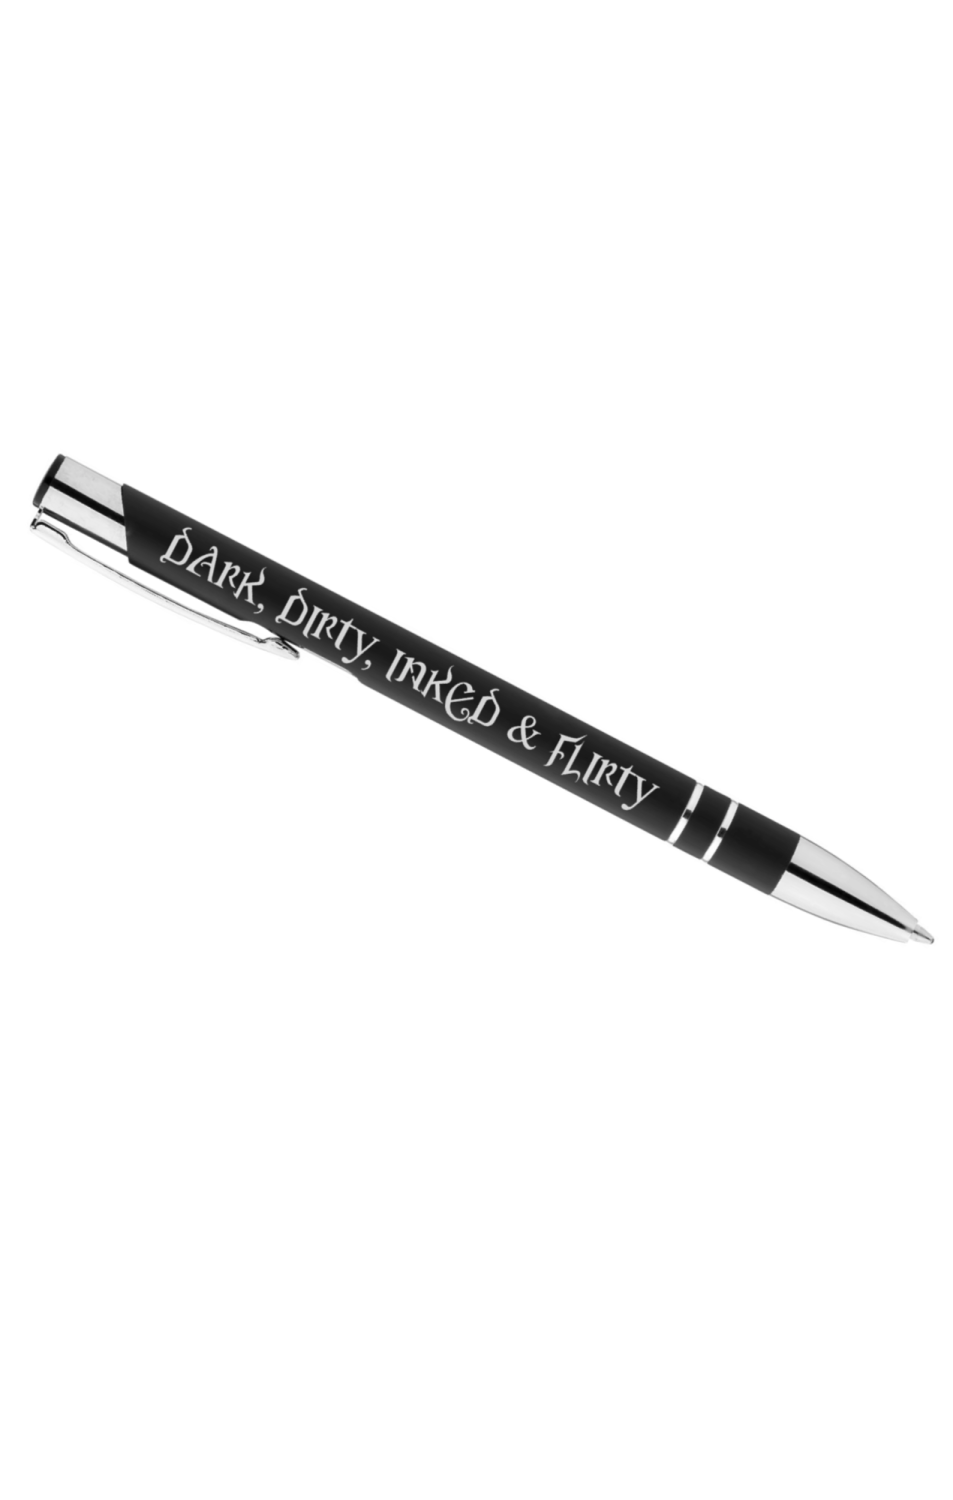 Dark, Dirty, Inked and Flirty Pen